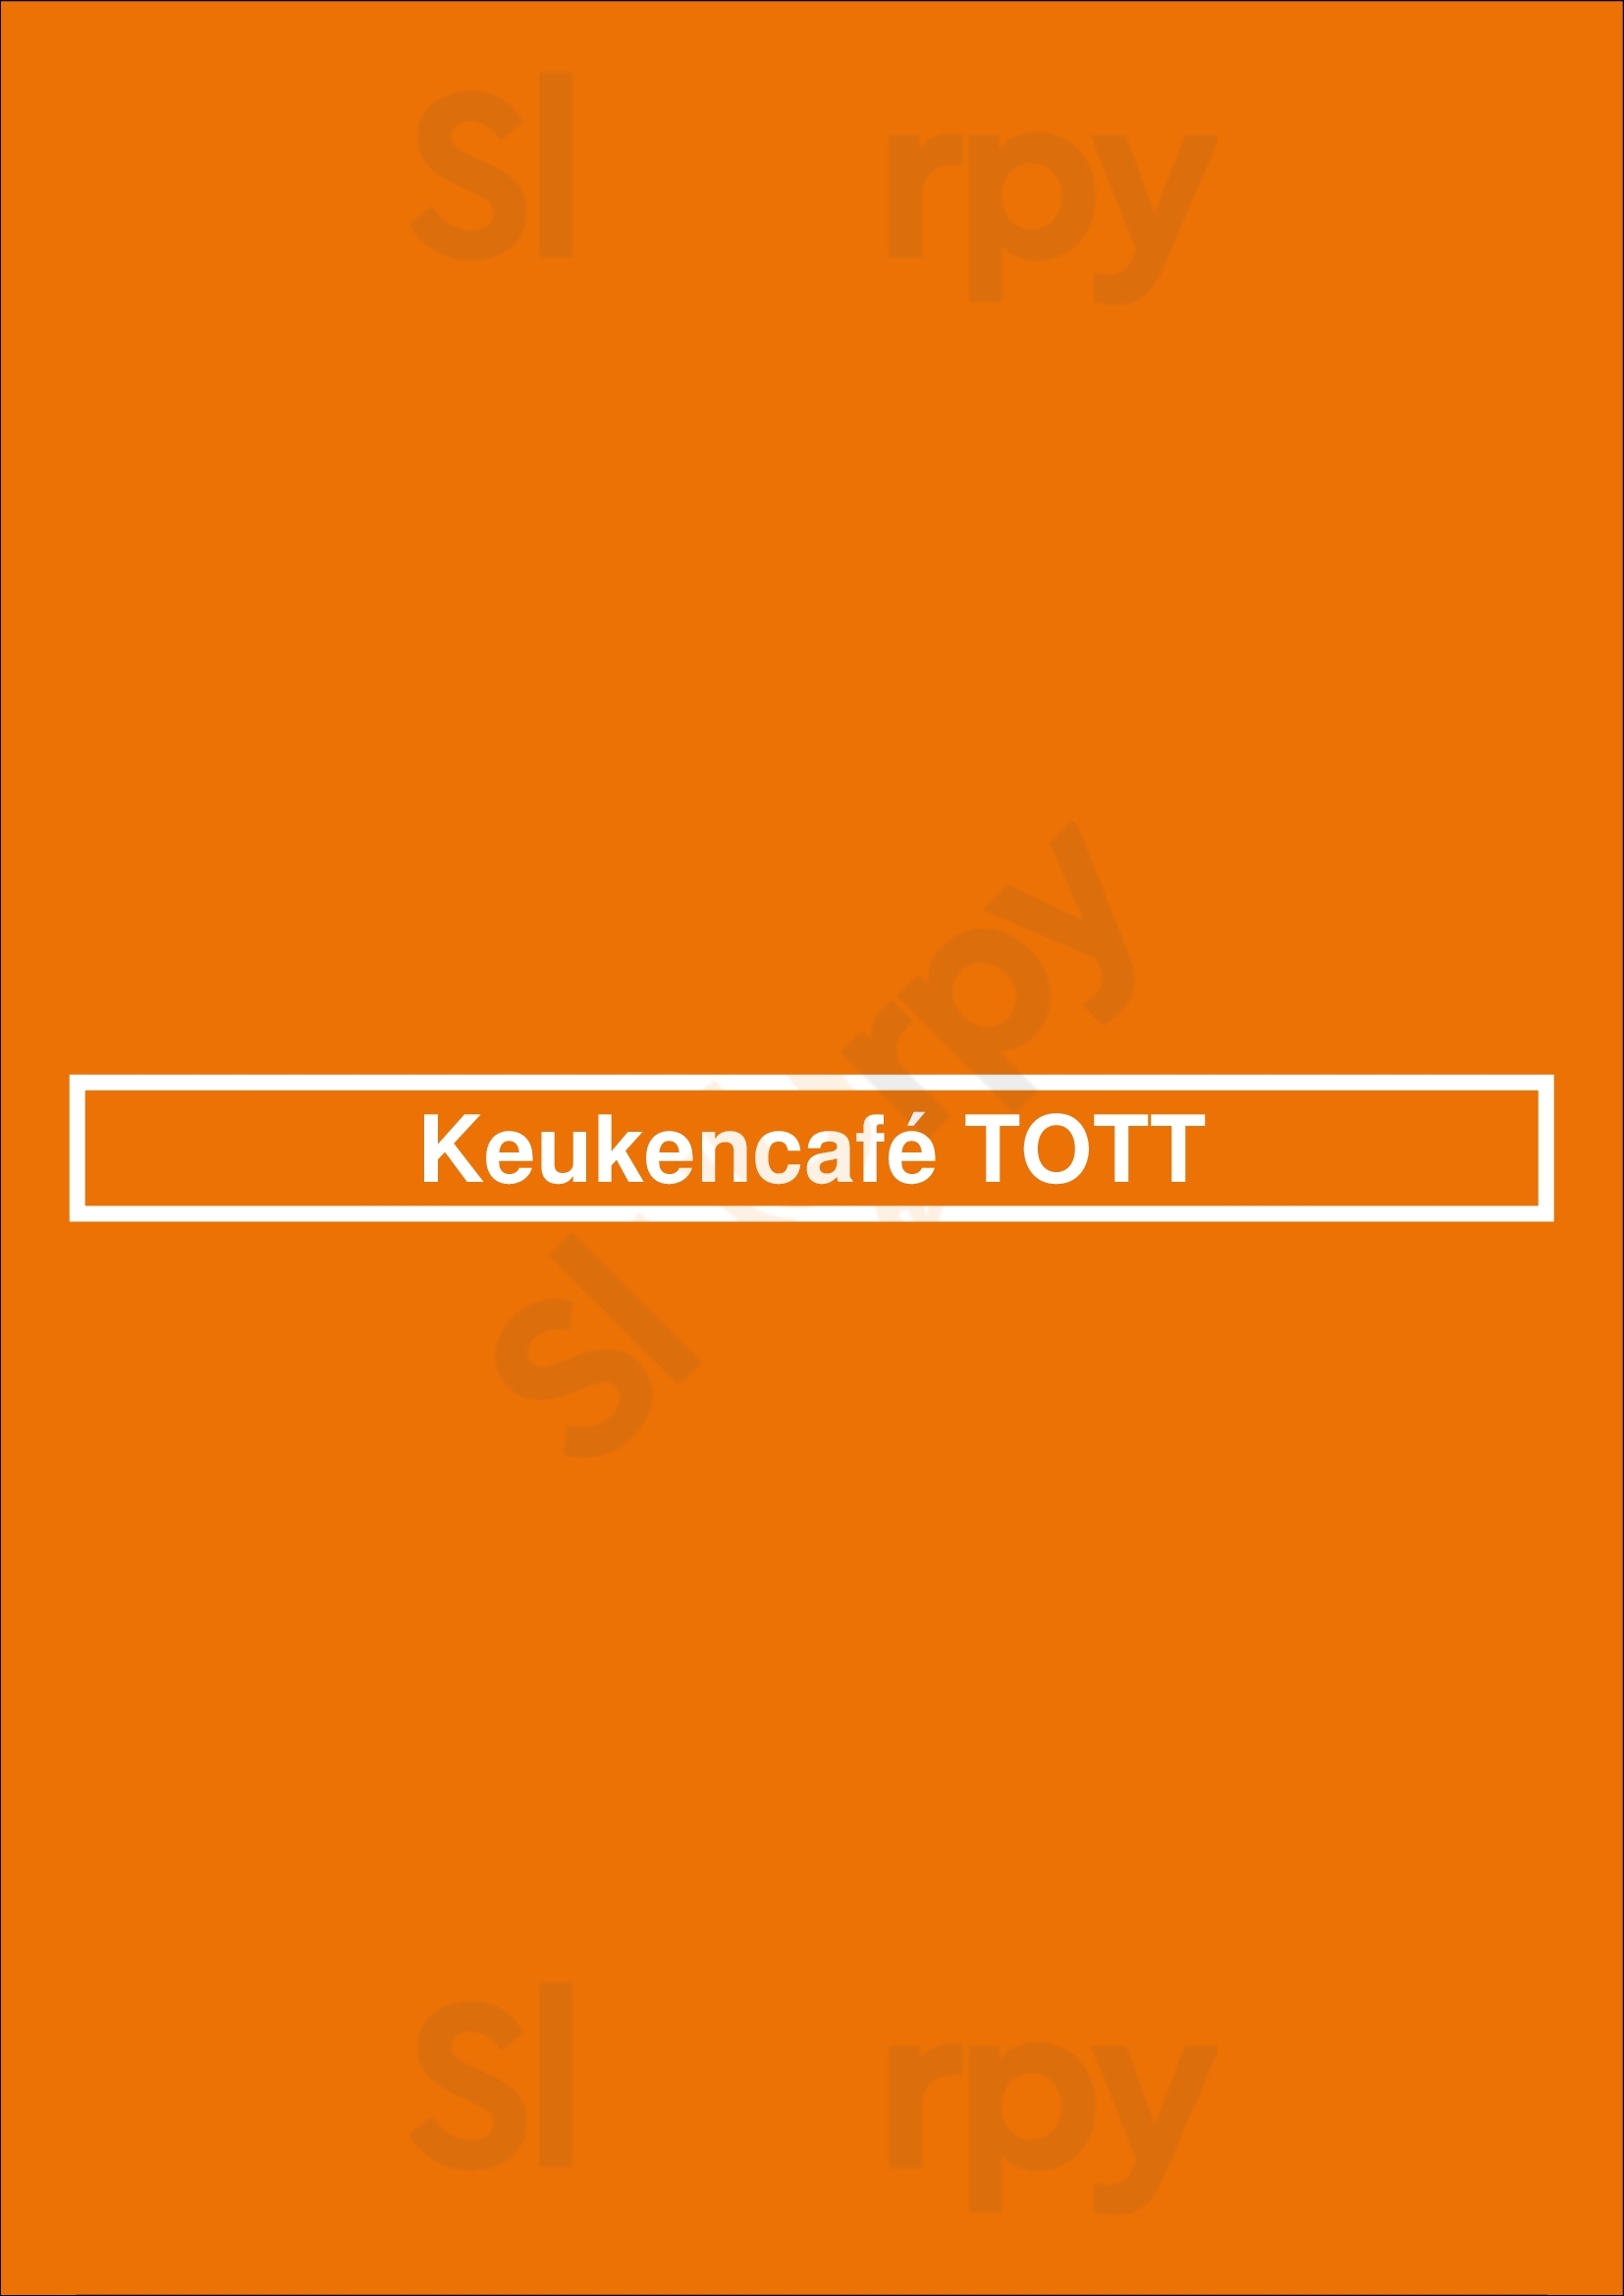 Keukencafé Tott Leeuwarden Menu - 1